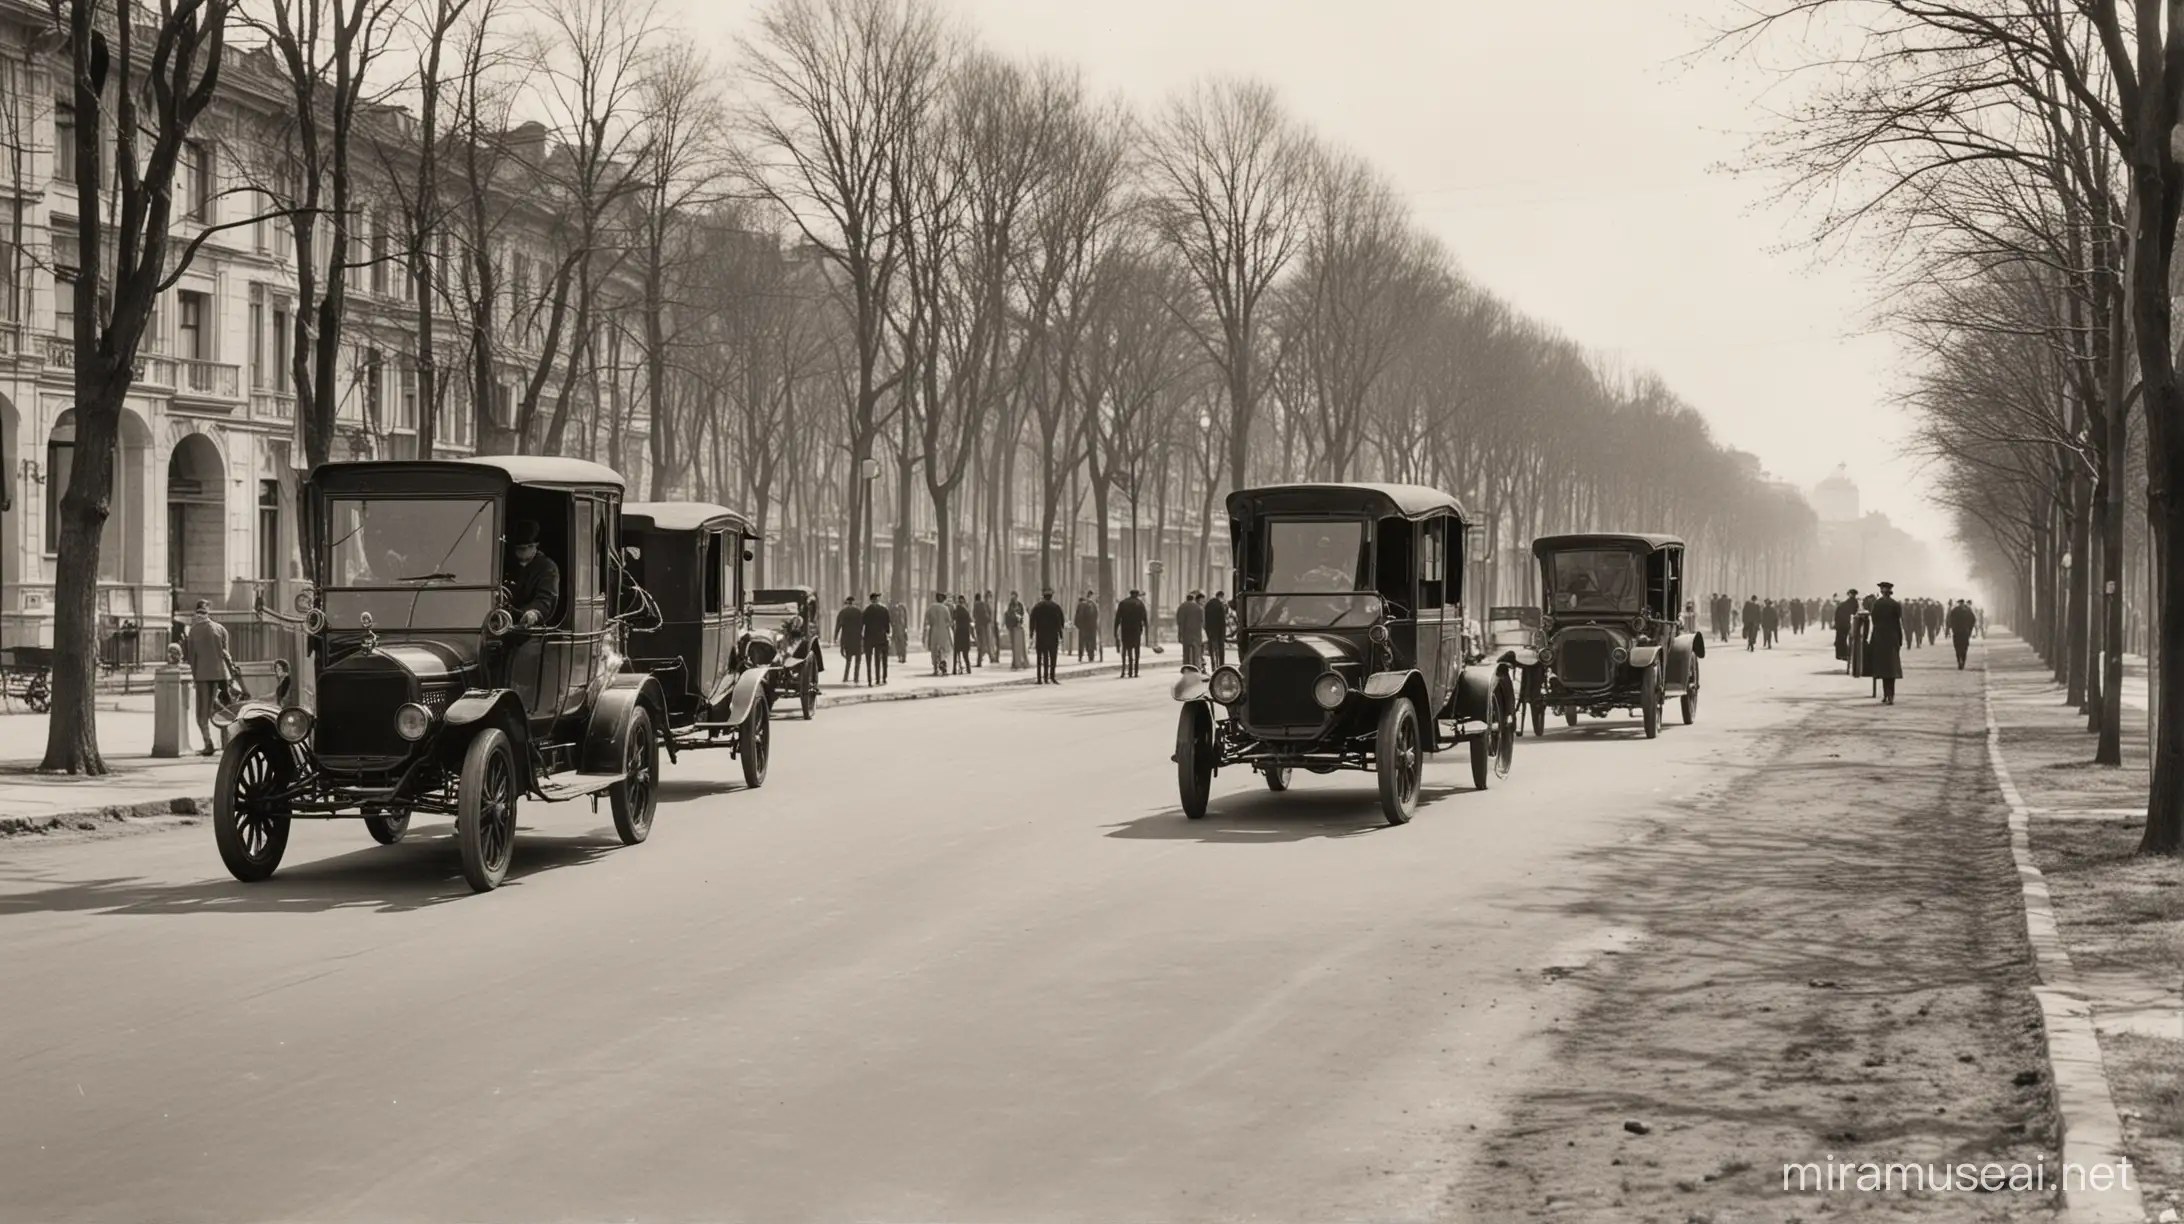 8 Carros A.L.F.A 24 HP andando na avenida romena, em 1910. Fotografia preta e branca.